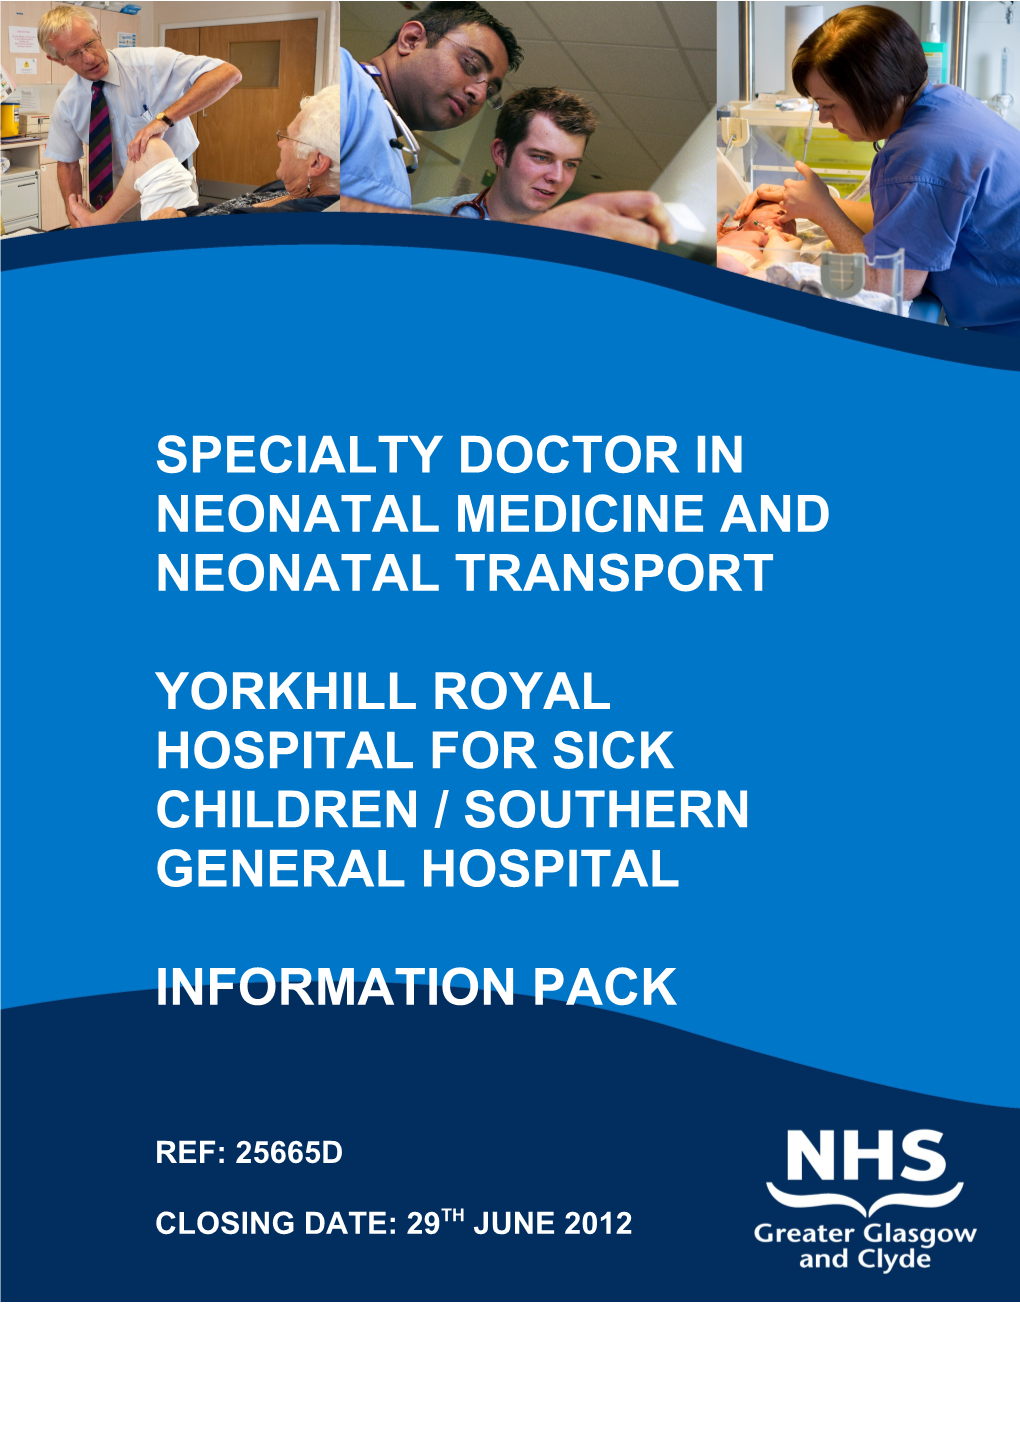 Specialty Doctor in Neonatal Medicine and Neonatal Transport